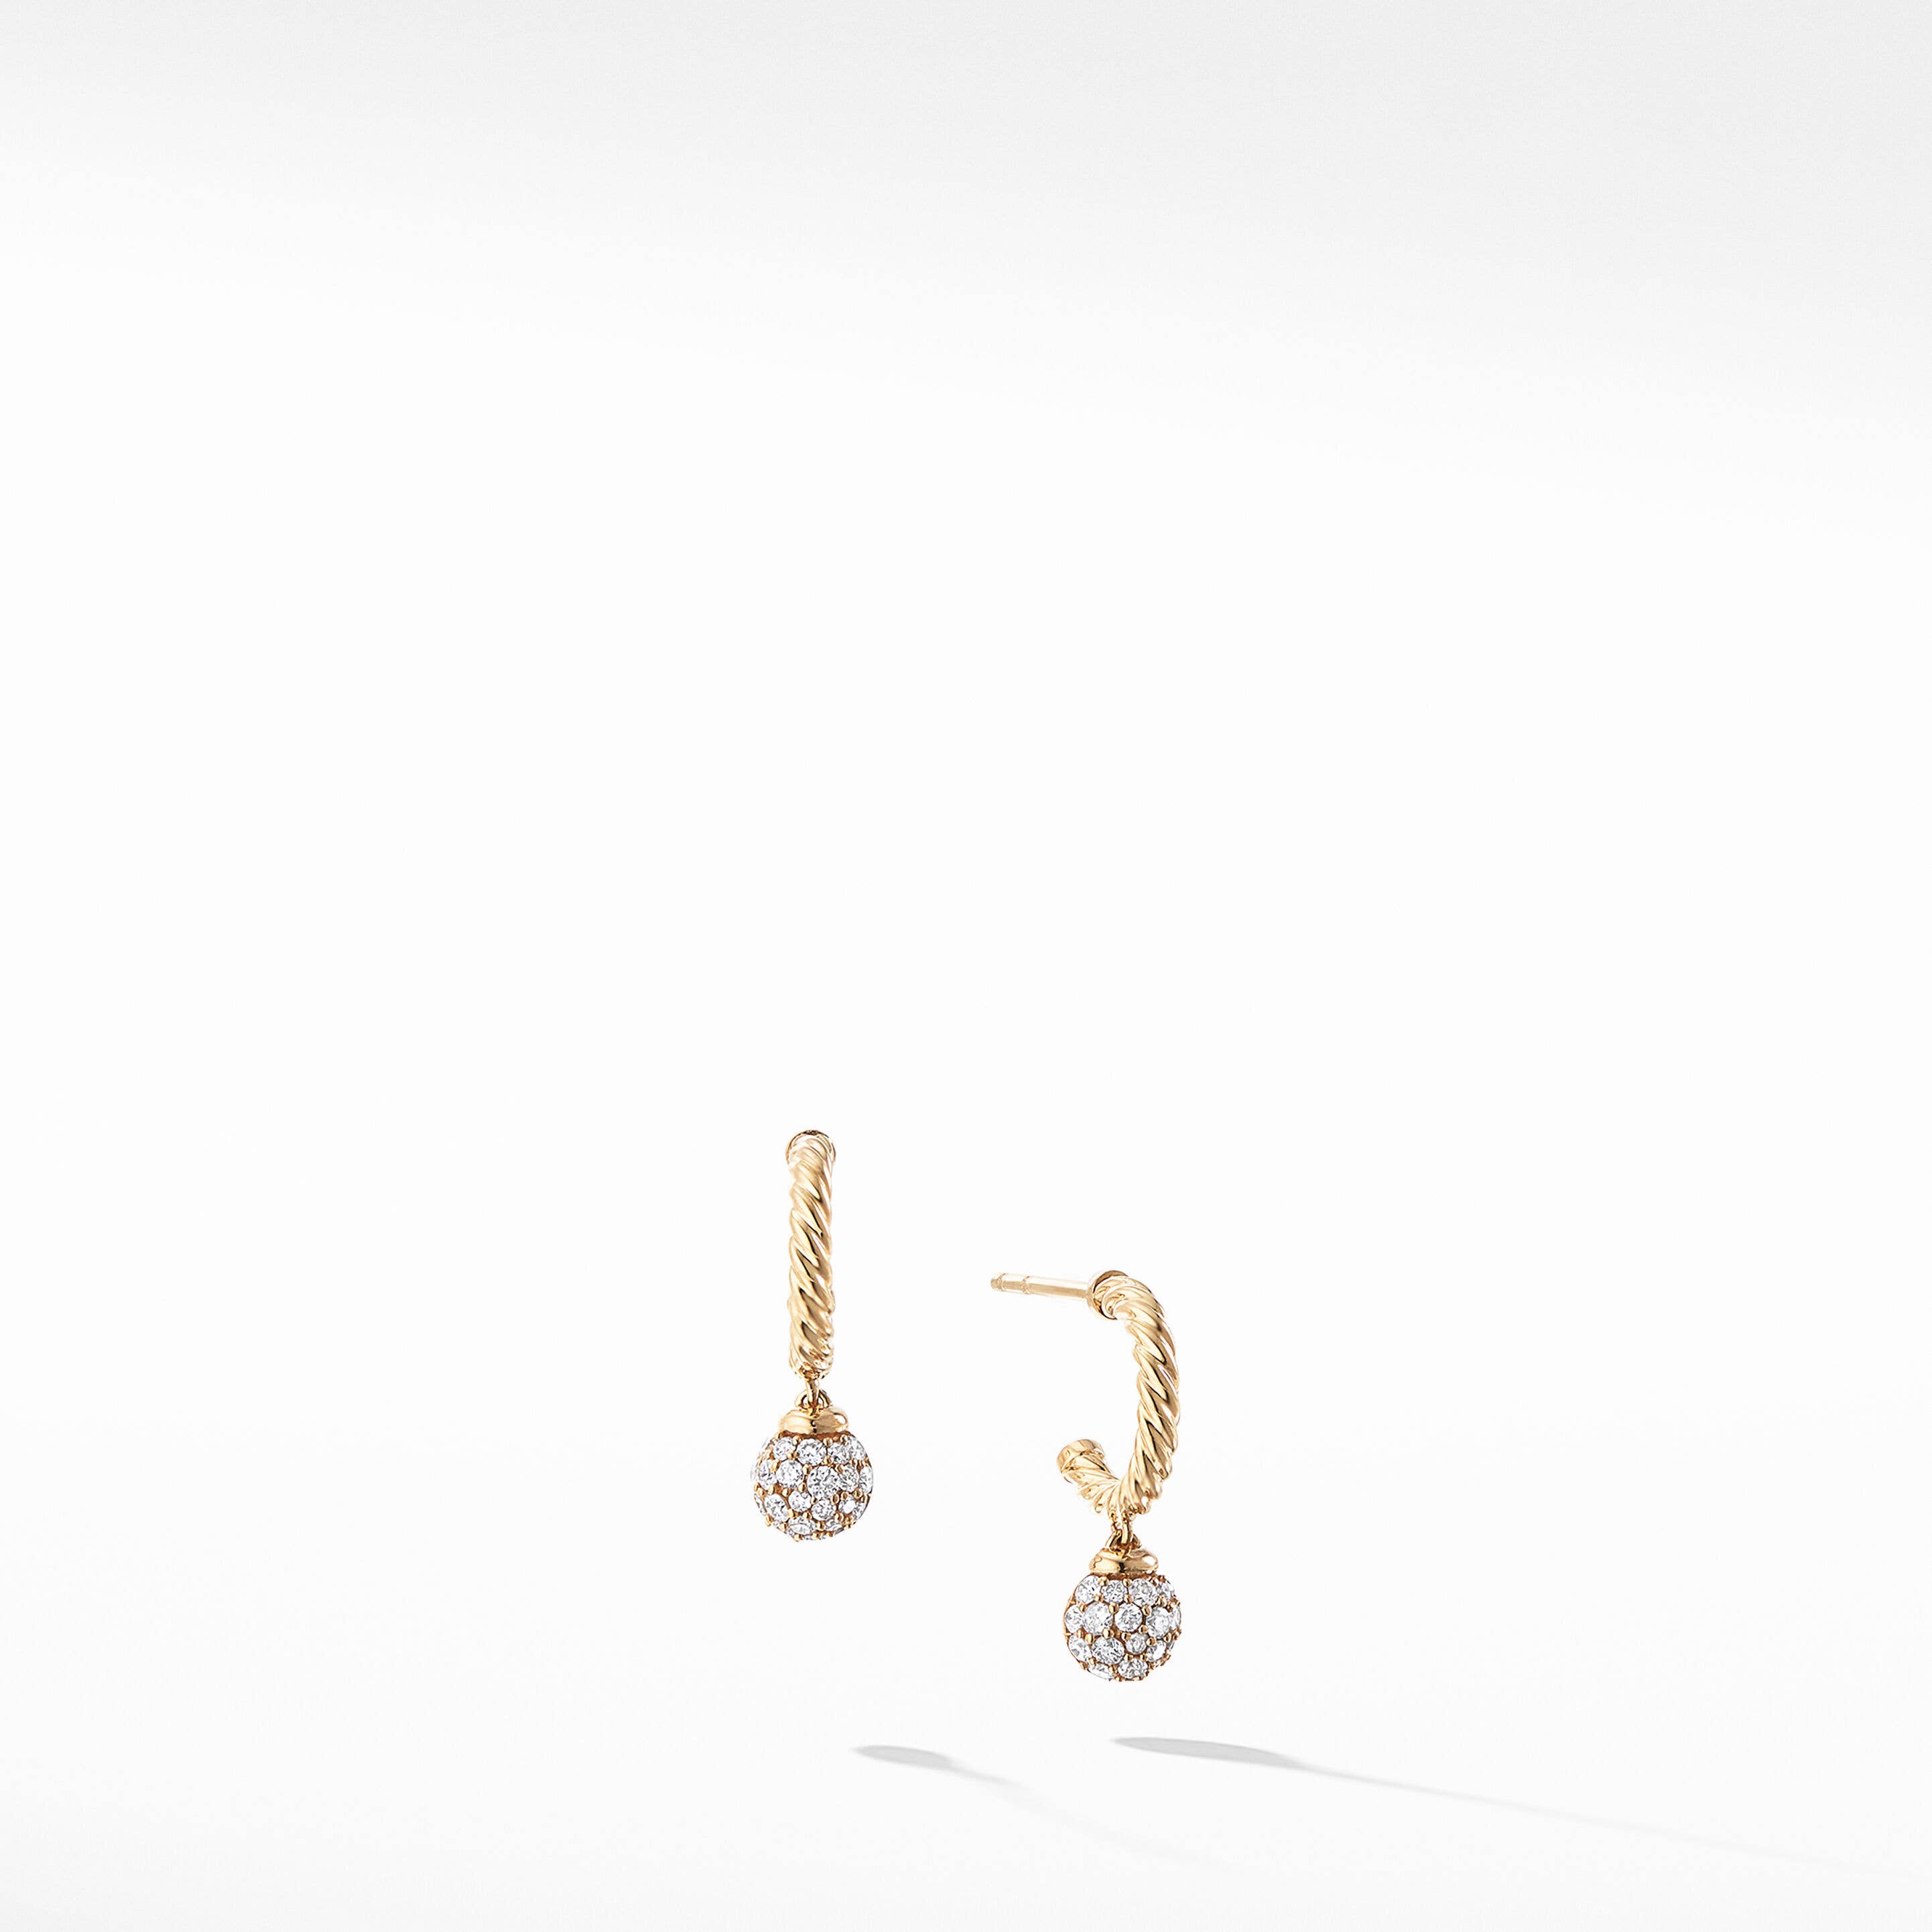 Petite Solari Hoop Drop Earrings in 18K Yellow Gold with Pavé Diamonds